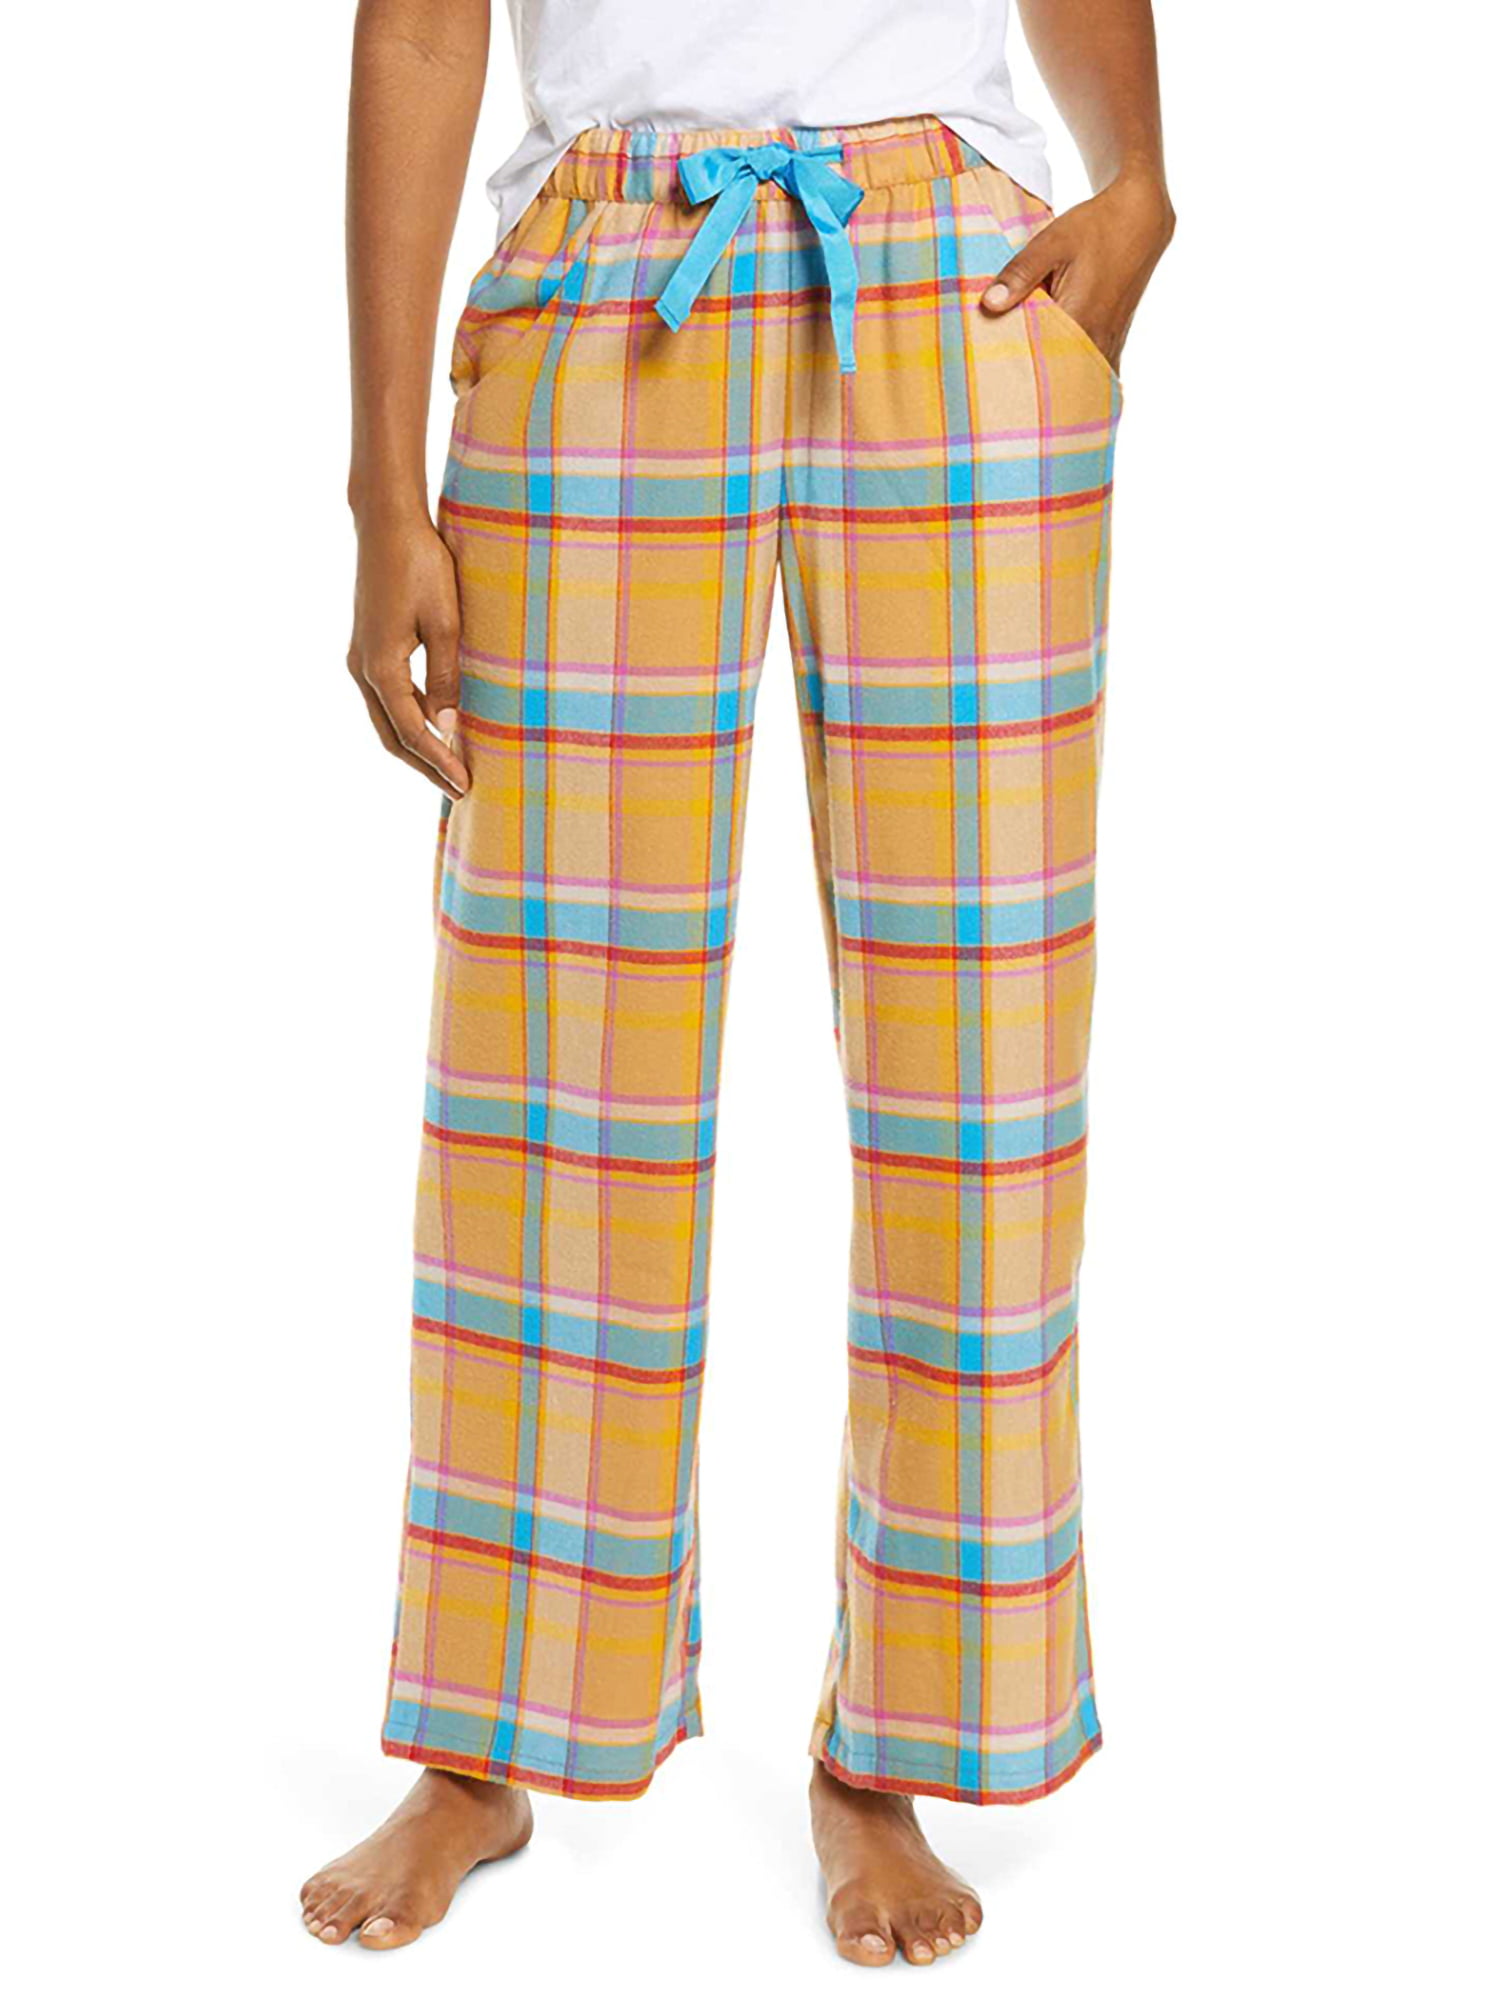 SIORO Womens Flannel Pant Cotton Pajama Bottoms PJ Pants Sleepwear Loungewear